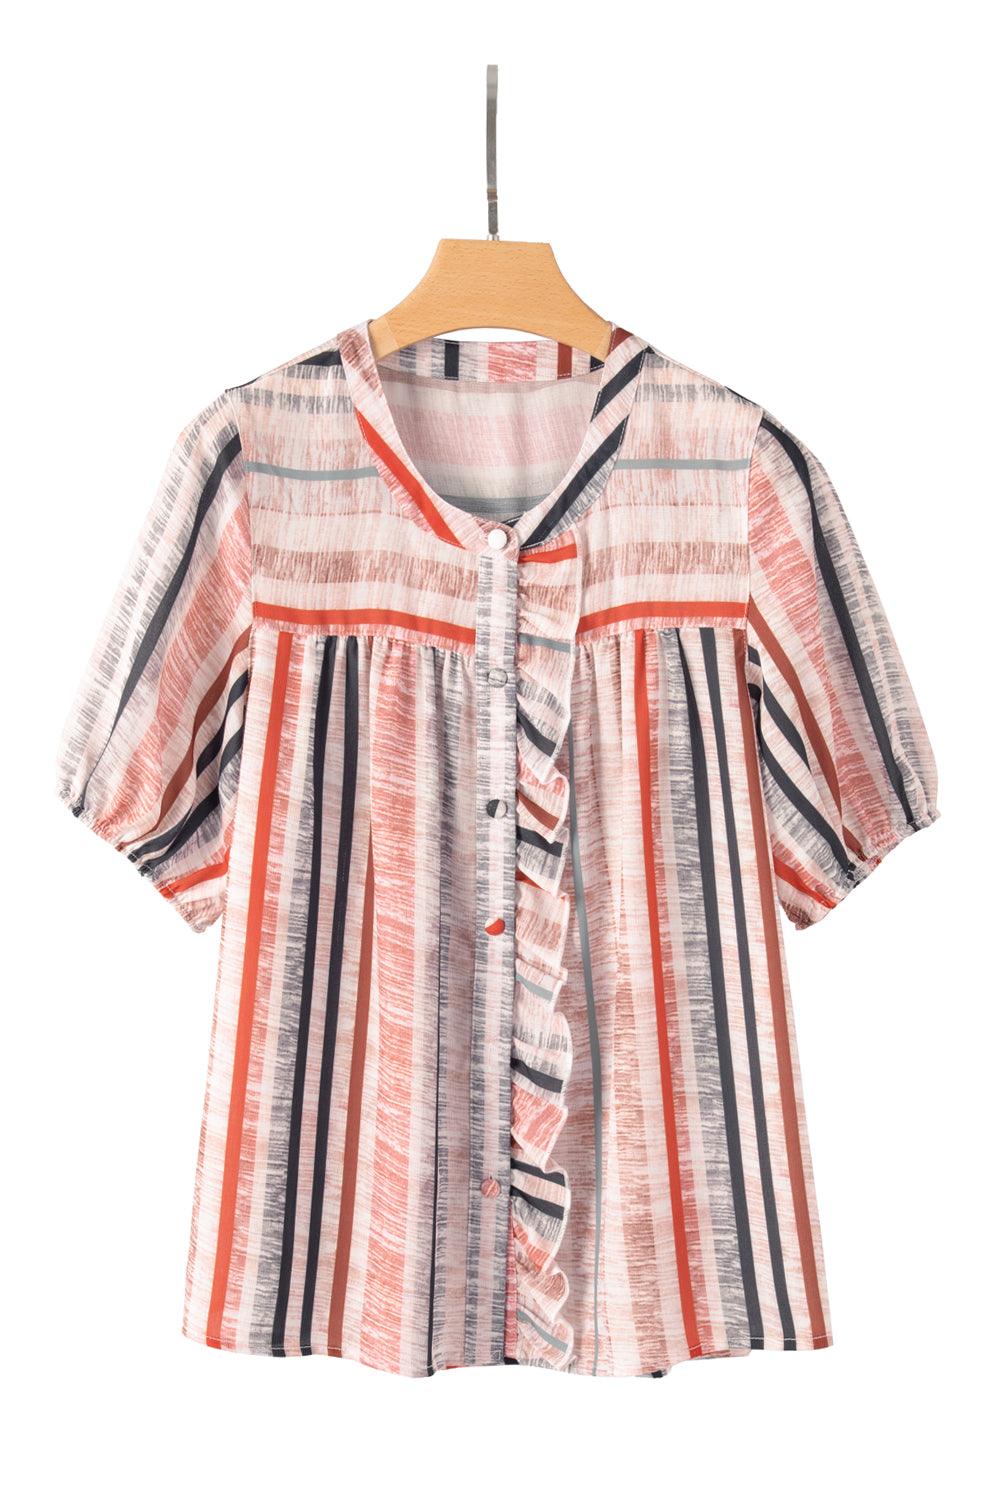 Khaki Stripe Multicolor Frilled Short Sleeve Shirt - L & M Kee, LLC